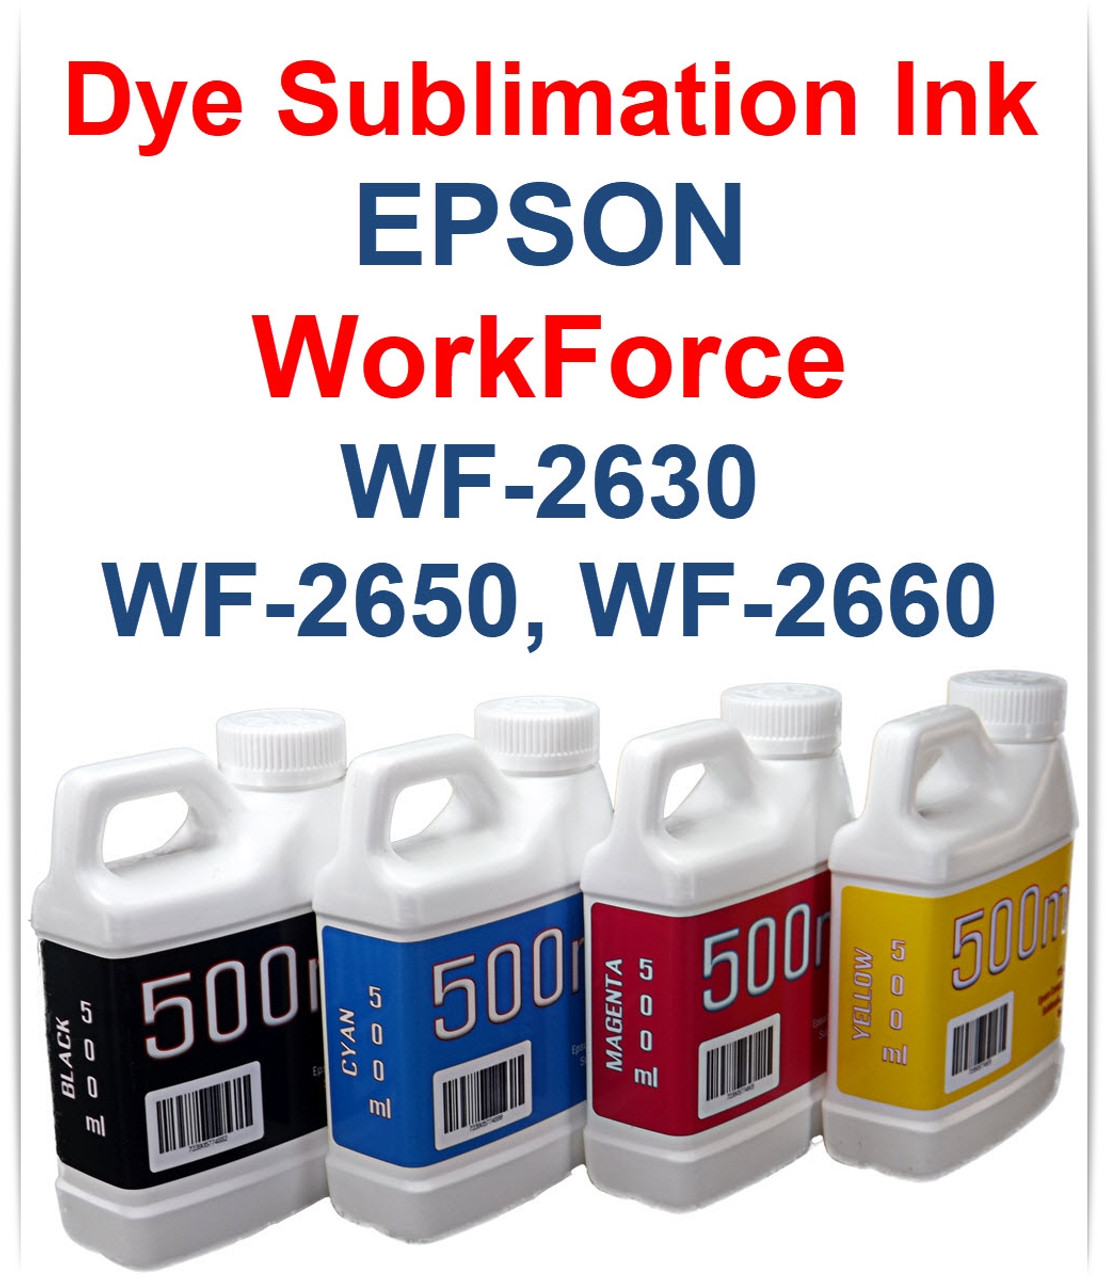 4- 500ml bottles Dye Sublimation Ink for Epson WorkForce WF-2630 WF-2650 WF-2660 Printers